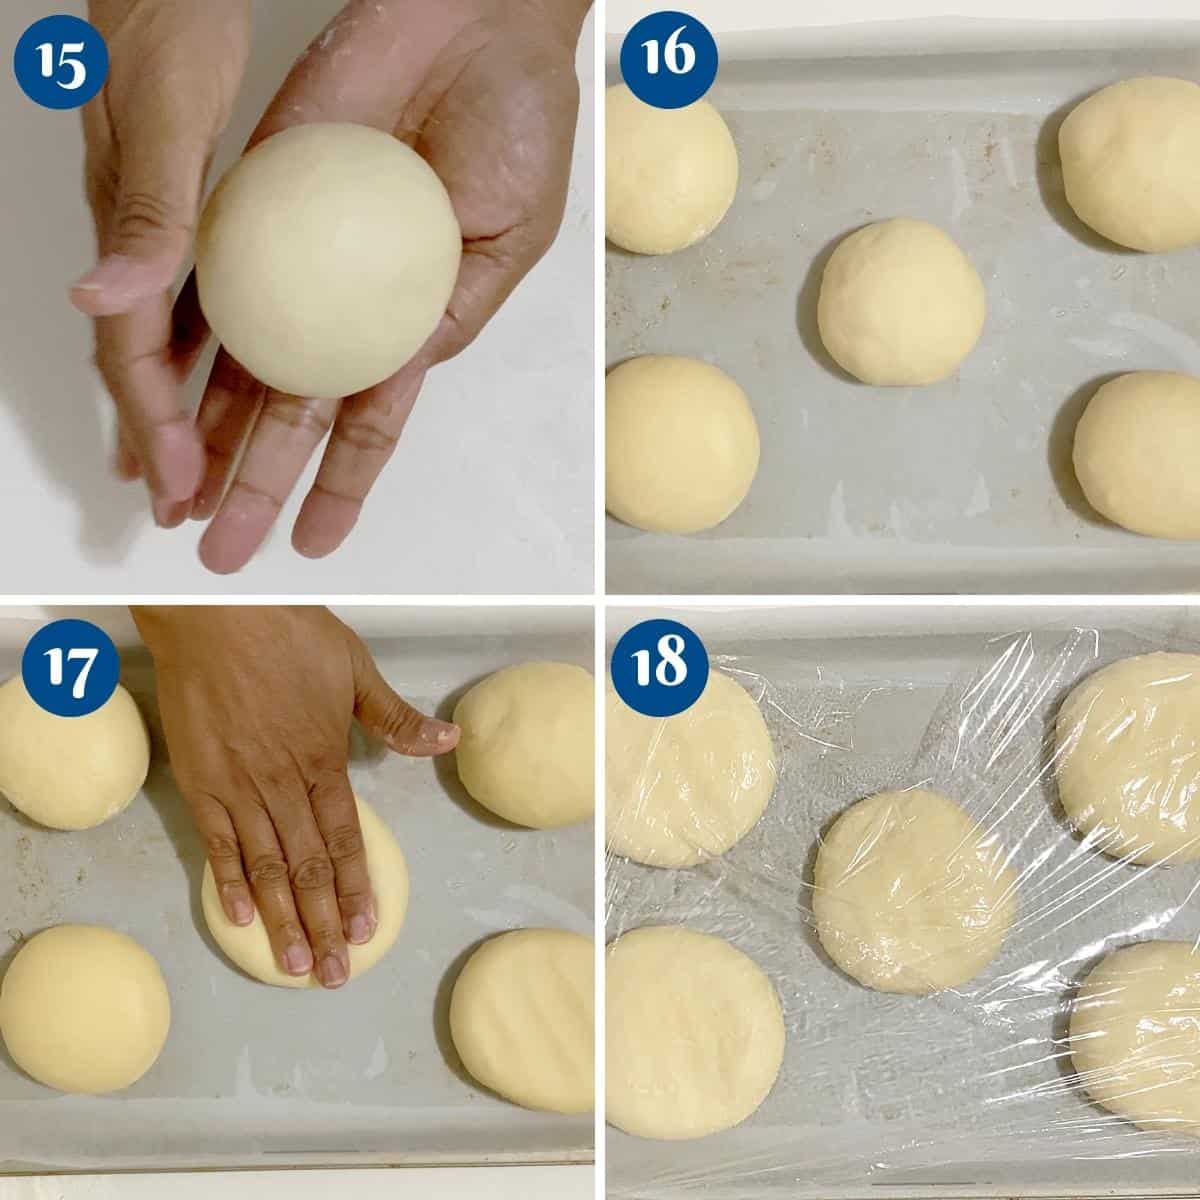 Progress pictures shaping the sourdough buns.